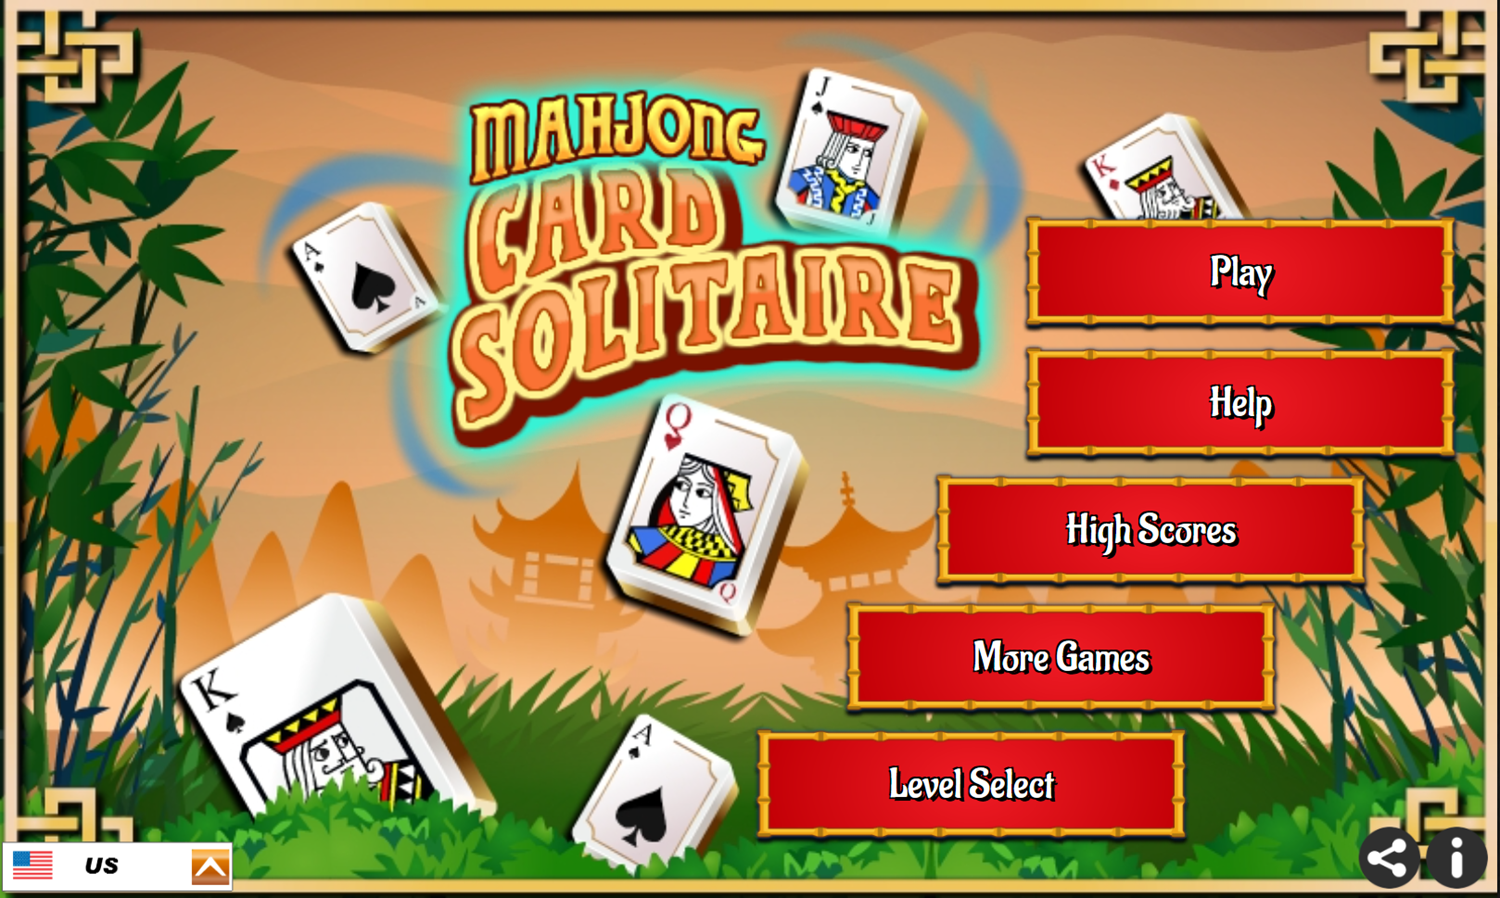 Mahjong Card Solitaire Game Welcome Screen Screenshot.